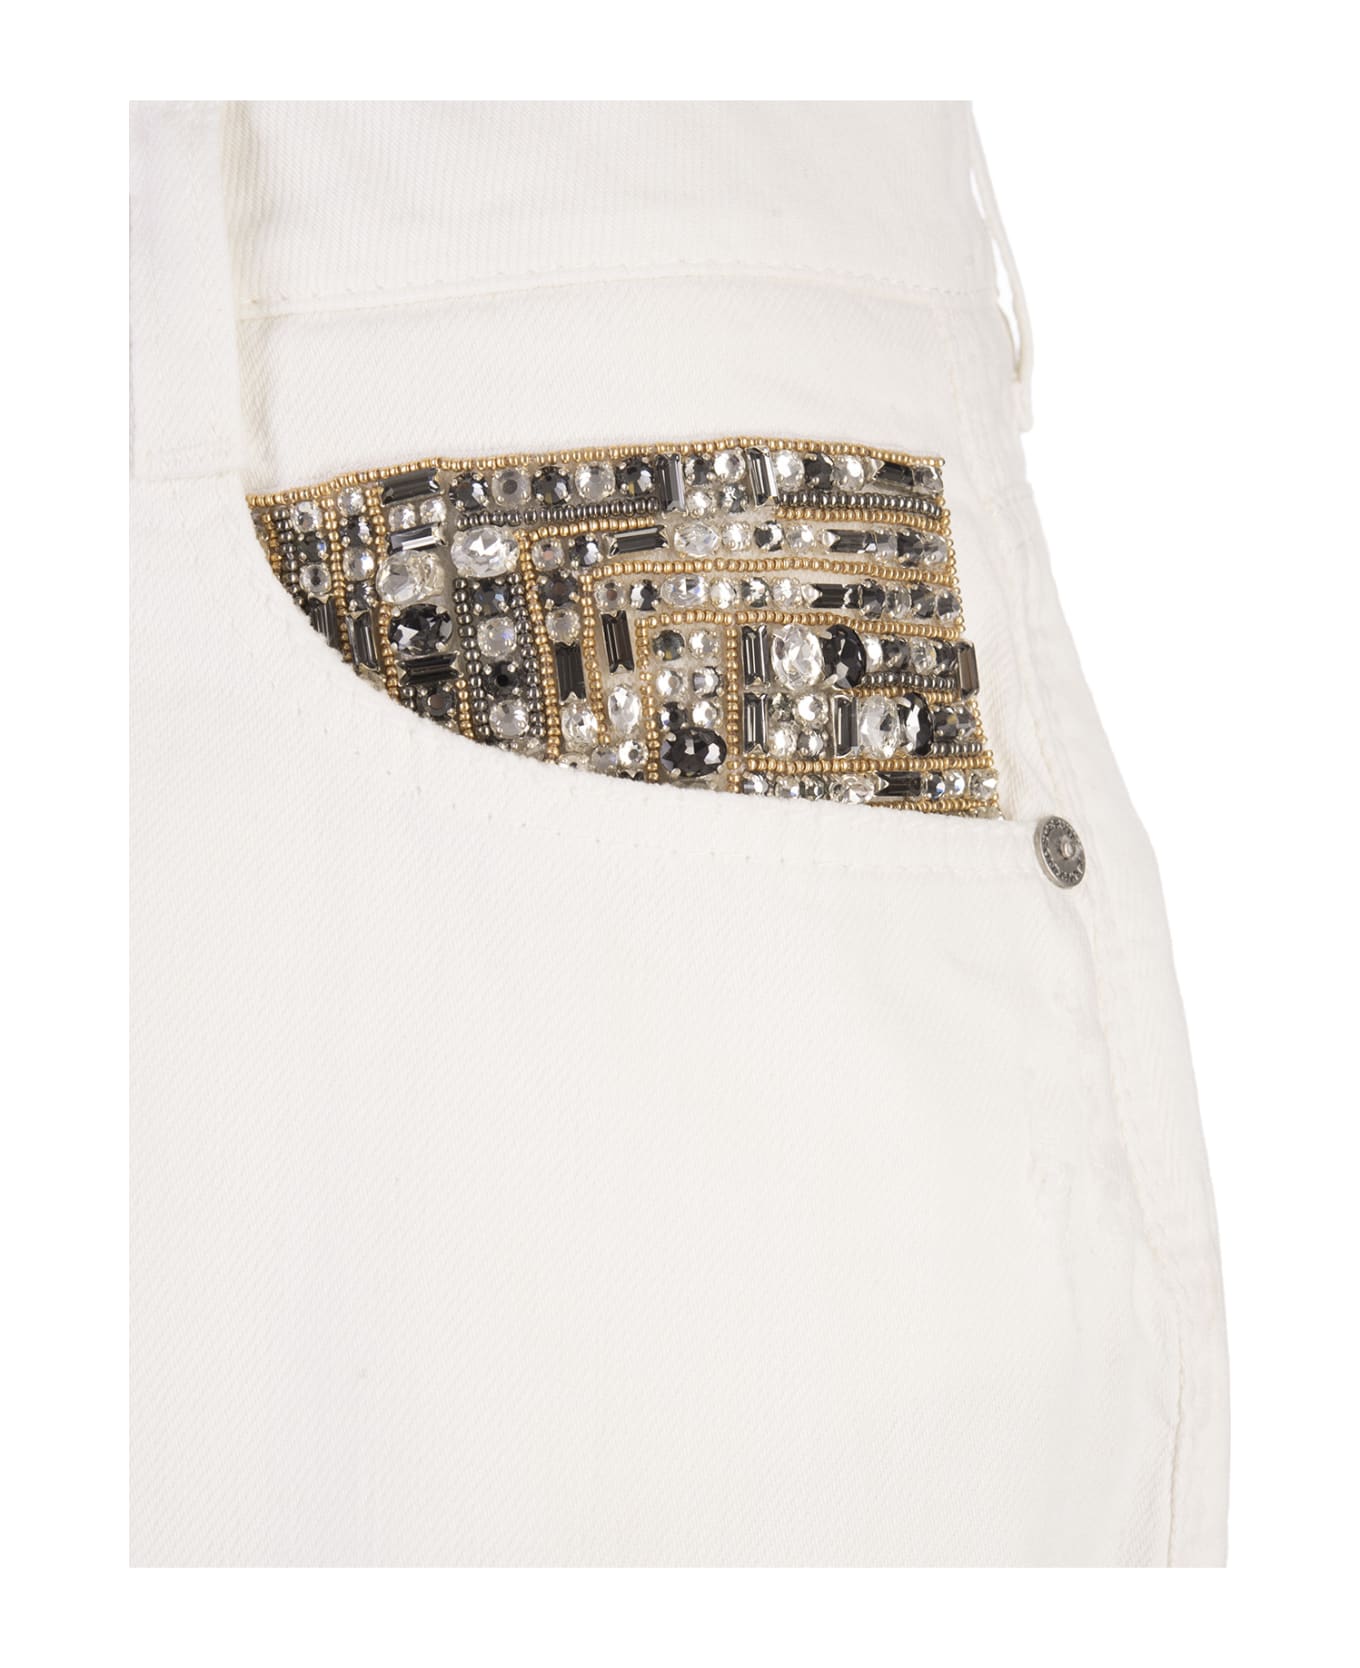 Ermanno Scervino White Shorts With Jewel Detailing - White ショートパンツ